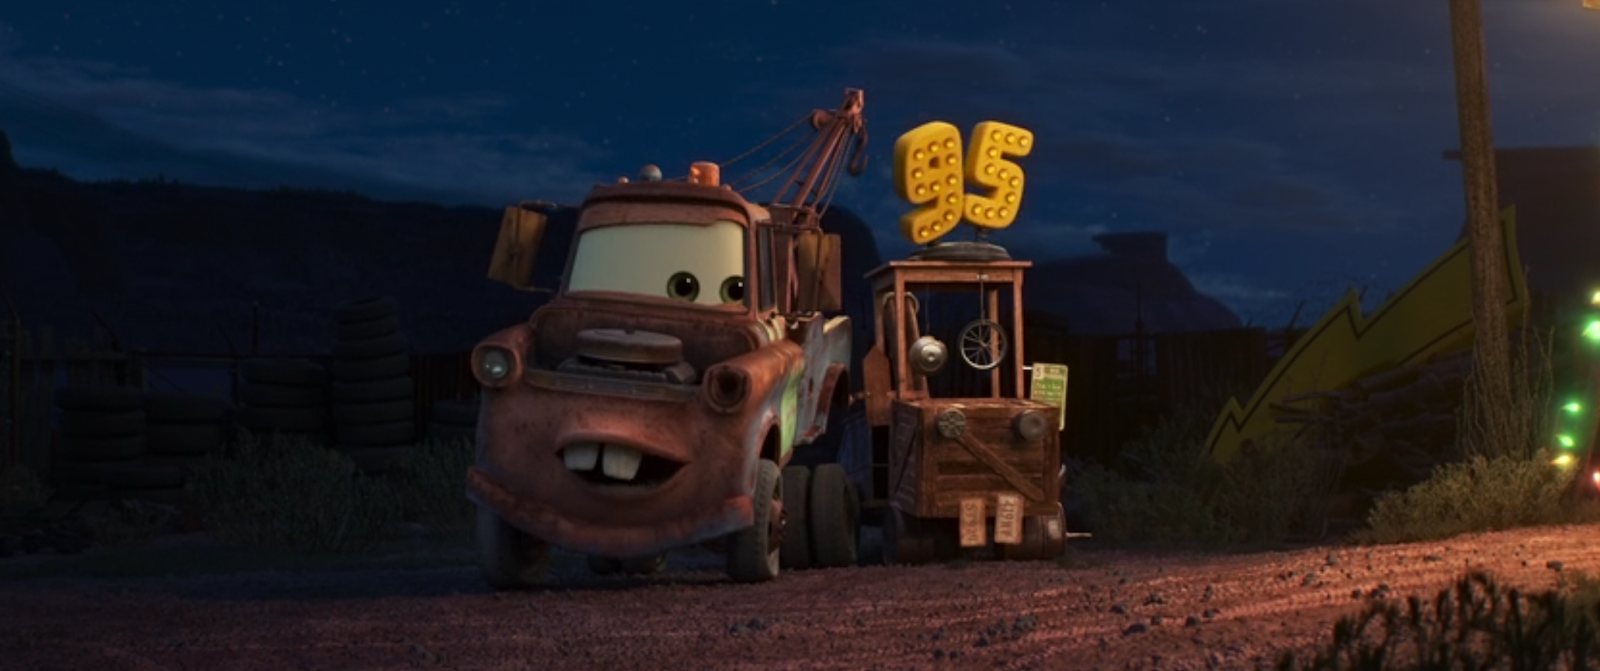 Disney Pixar Cars Mater with 95 Hat